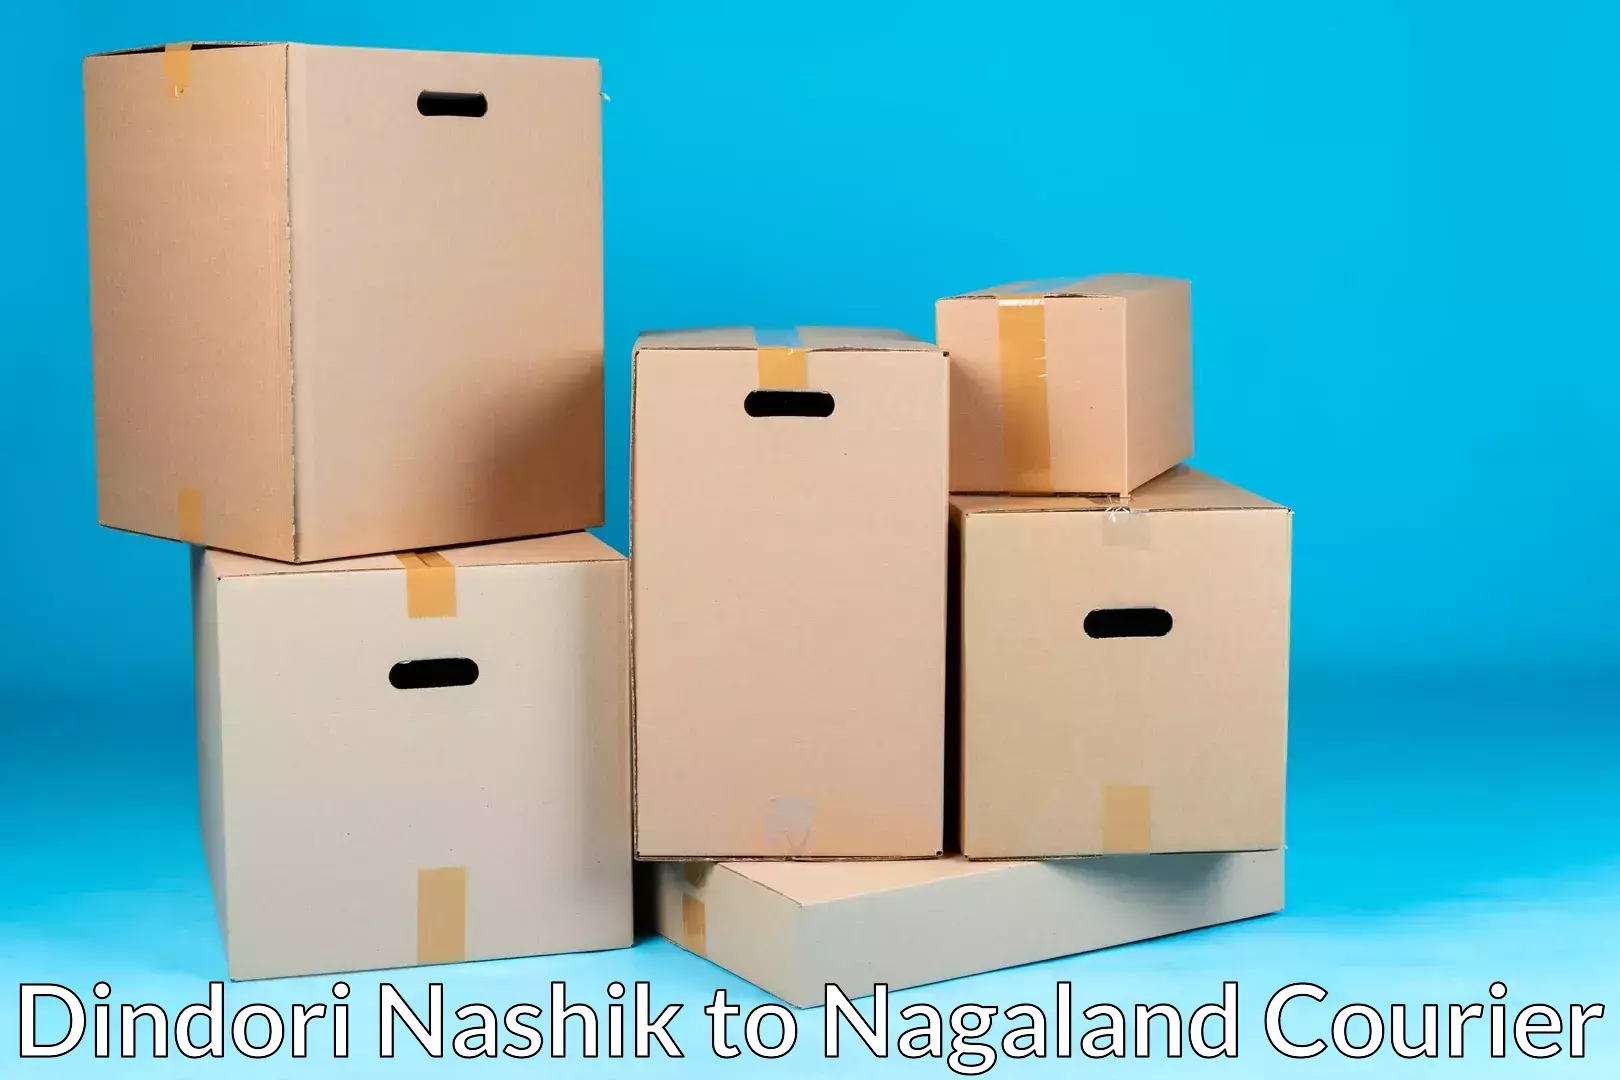 Trusted relocation experts Dindori Nashik to Nagaland